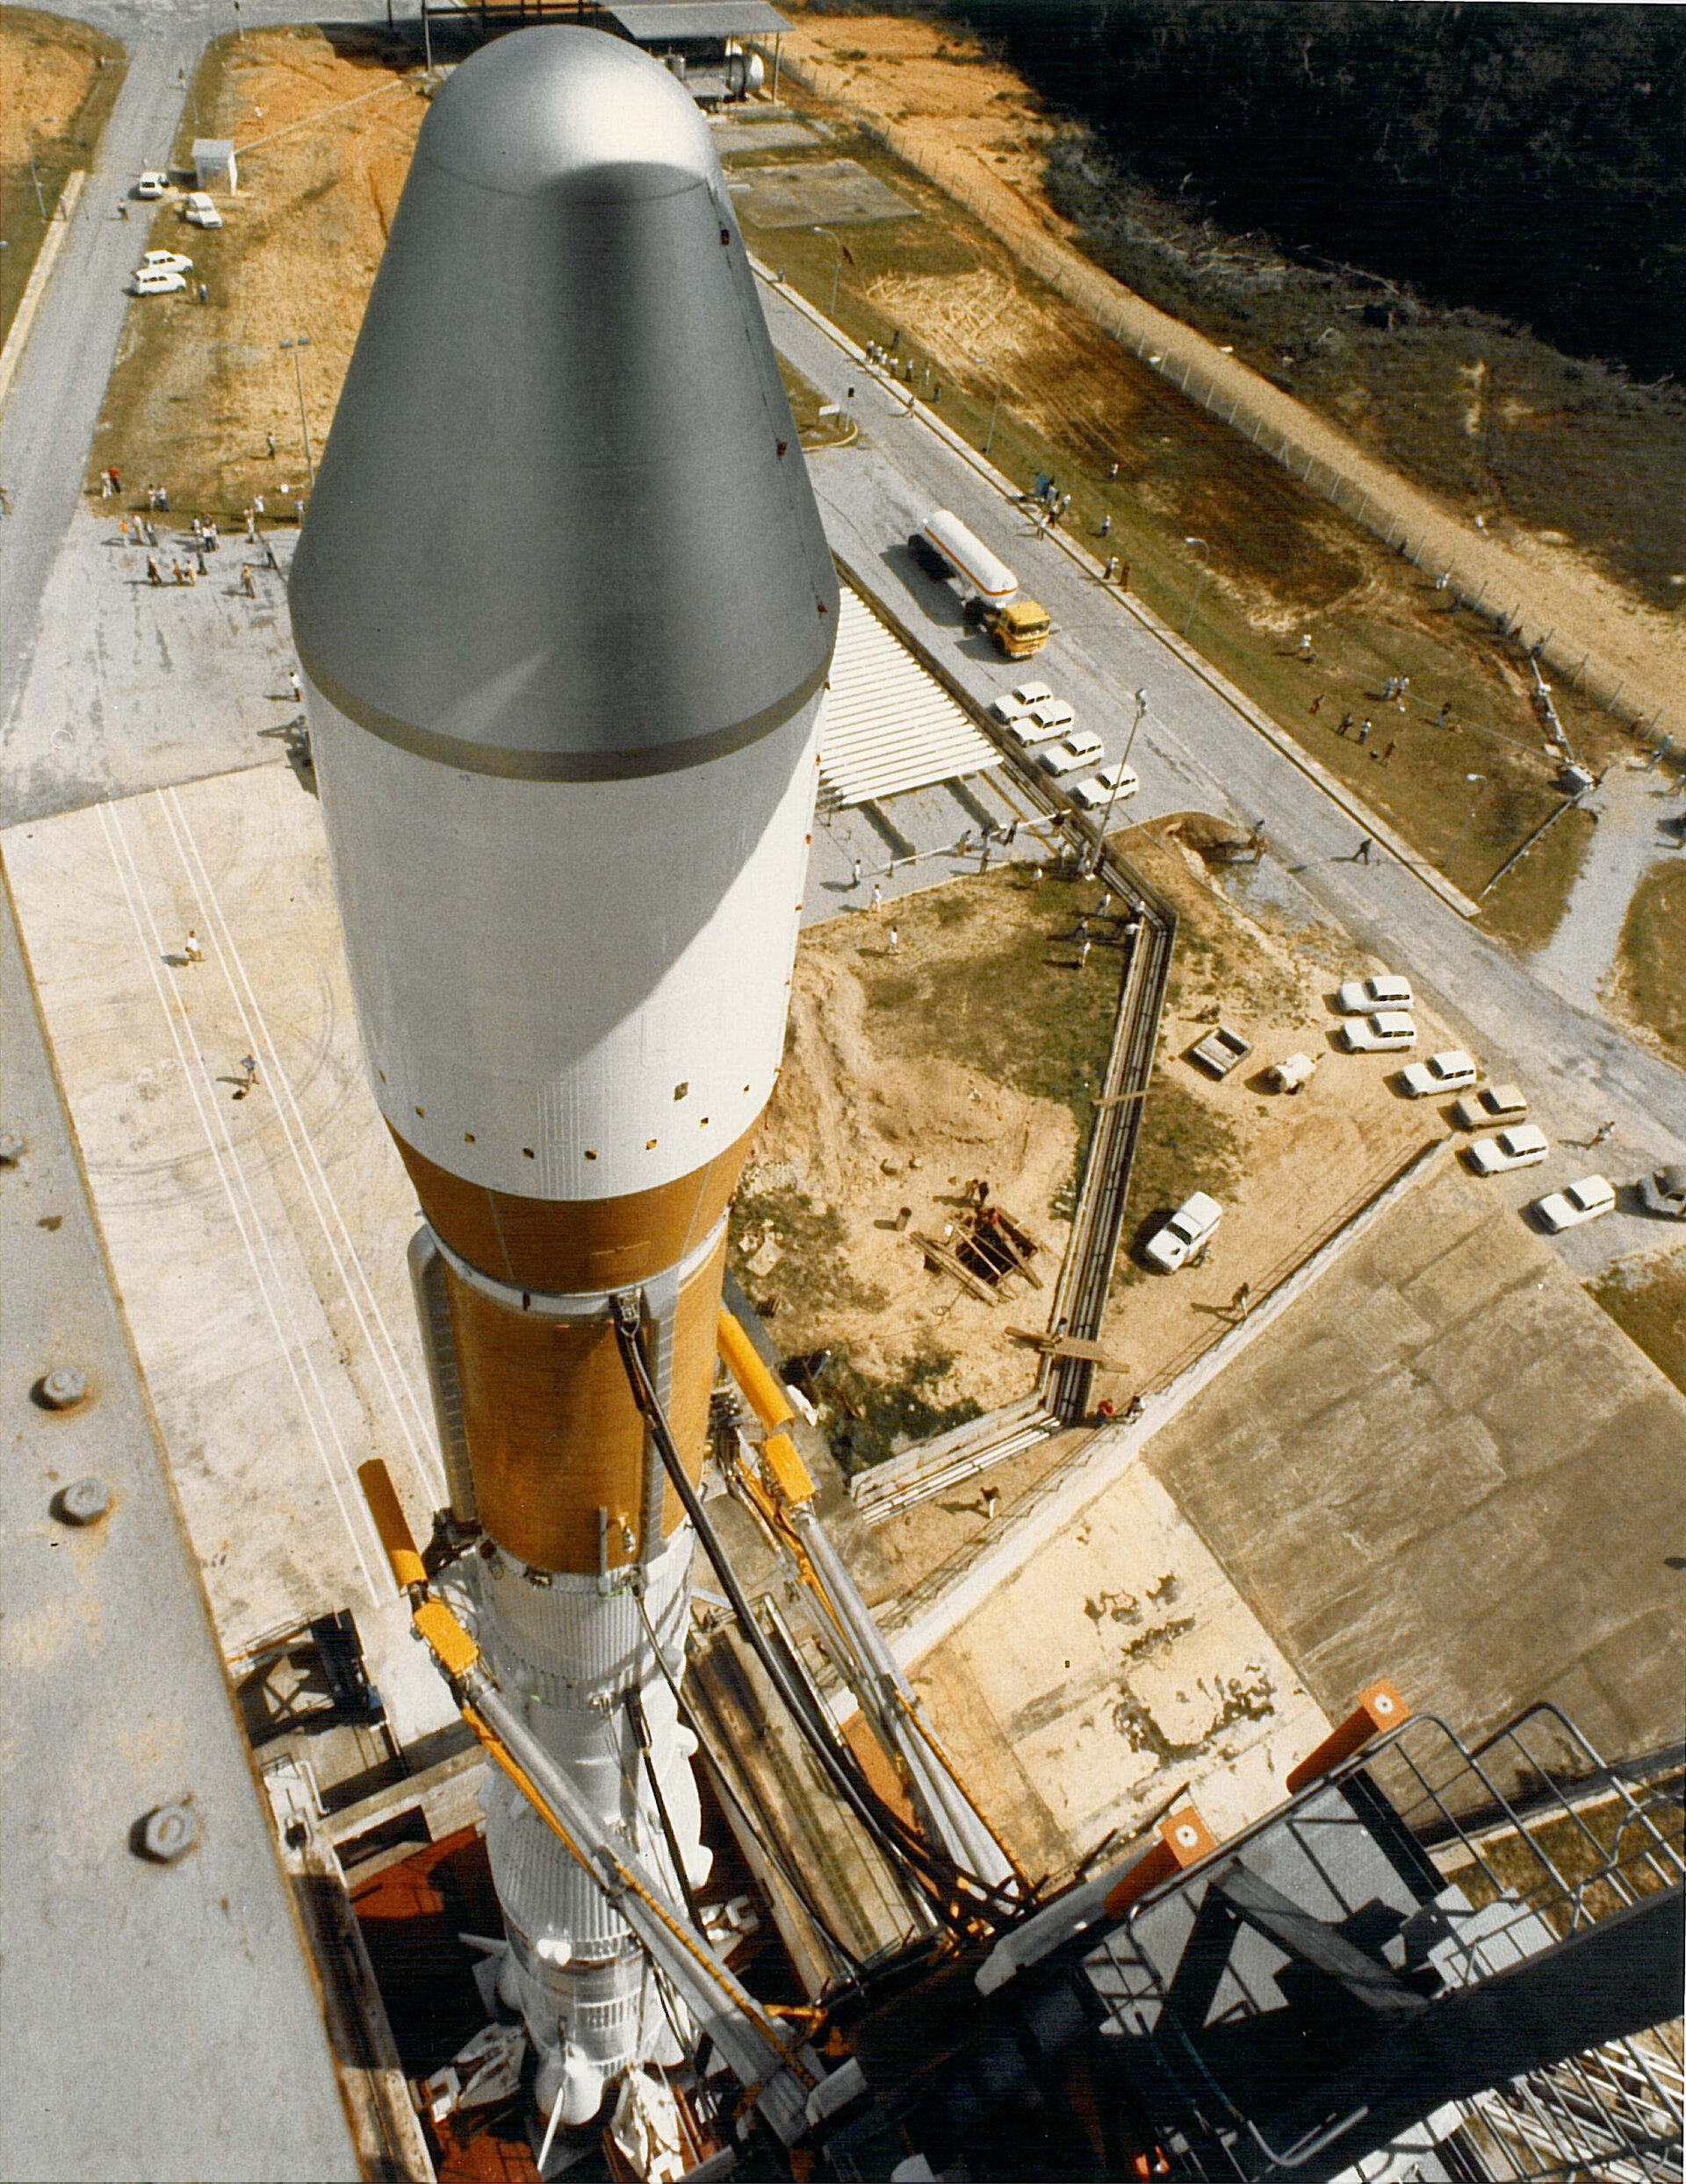 ESA - Part 3 - Preparing for the launch